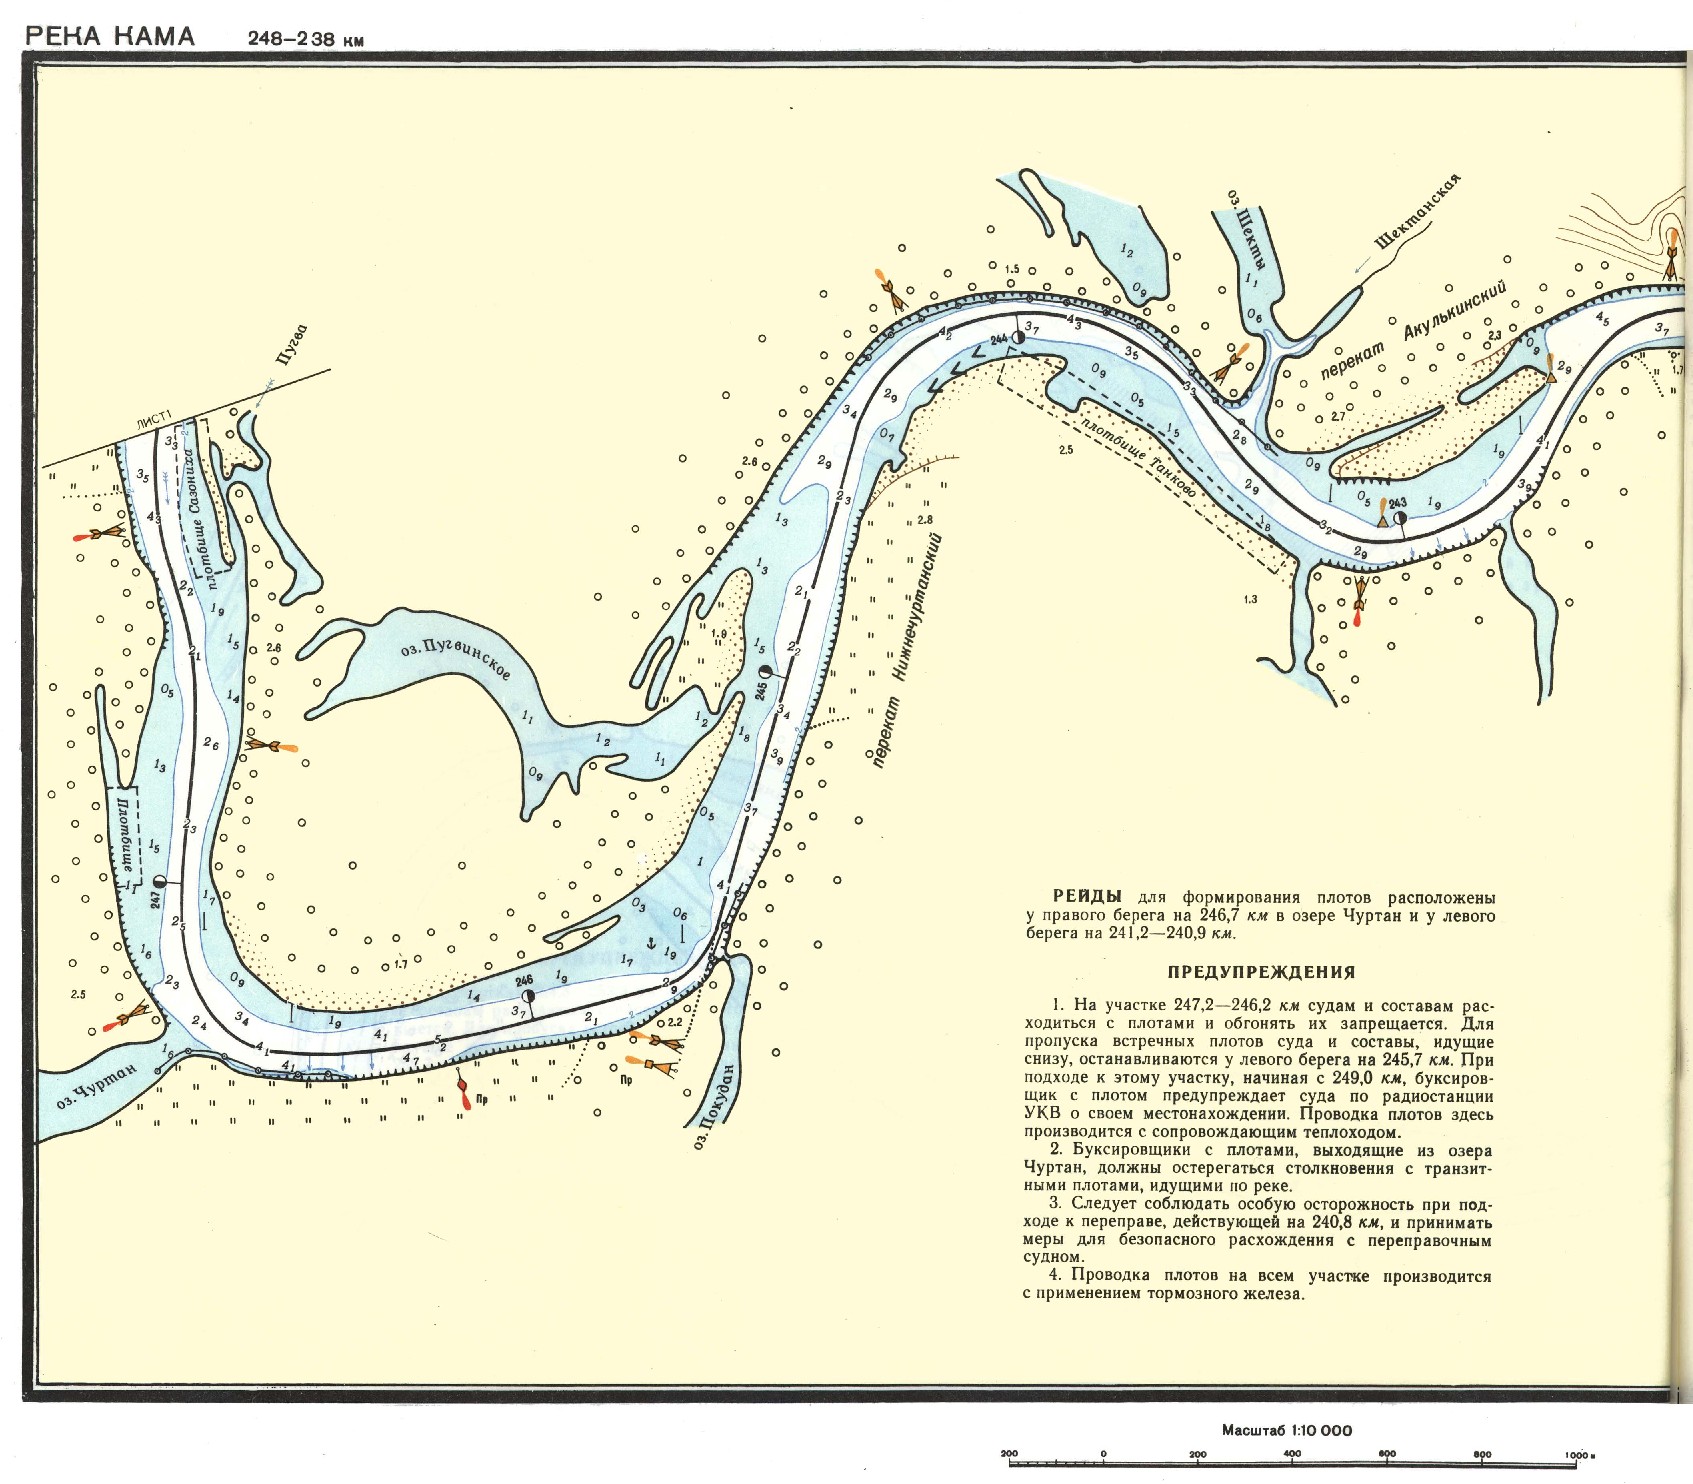 Левый приток реки кама. Направление течения реки Кама на карте. Течение реки Кама на карте. Схема течения реки Кама. Схема реки Кама в Перми.